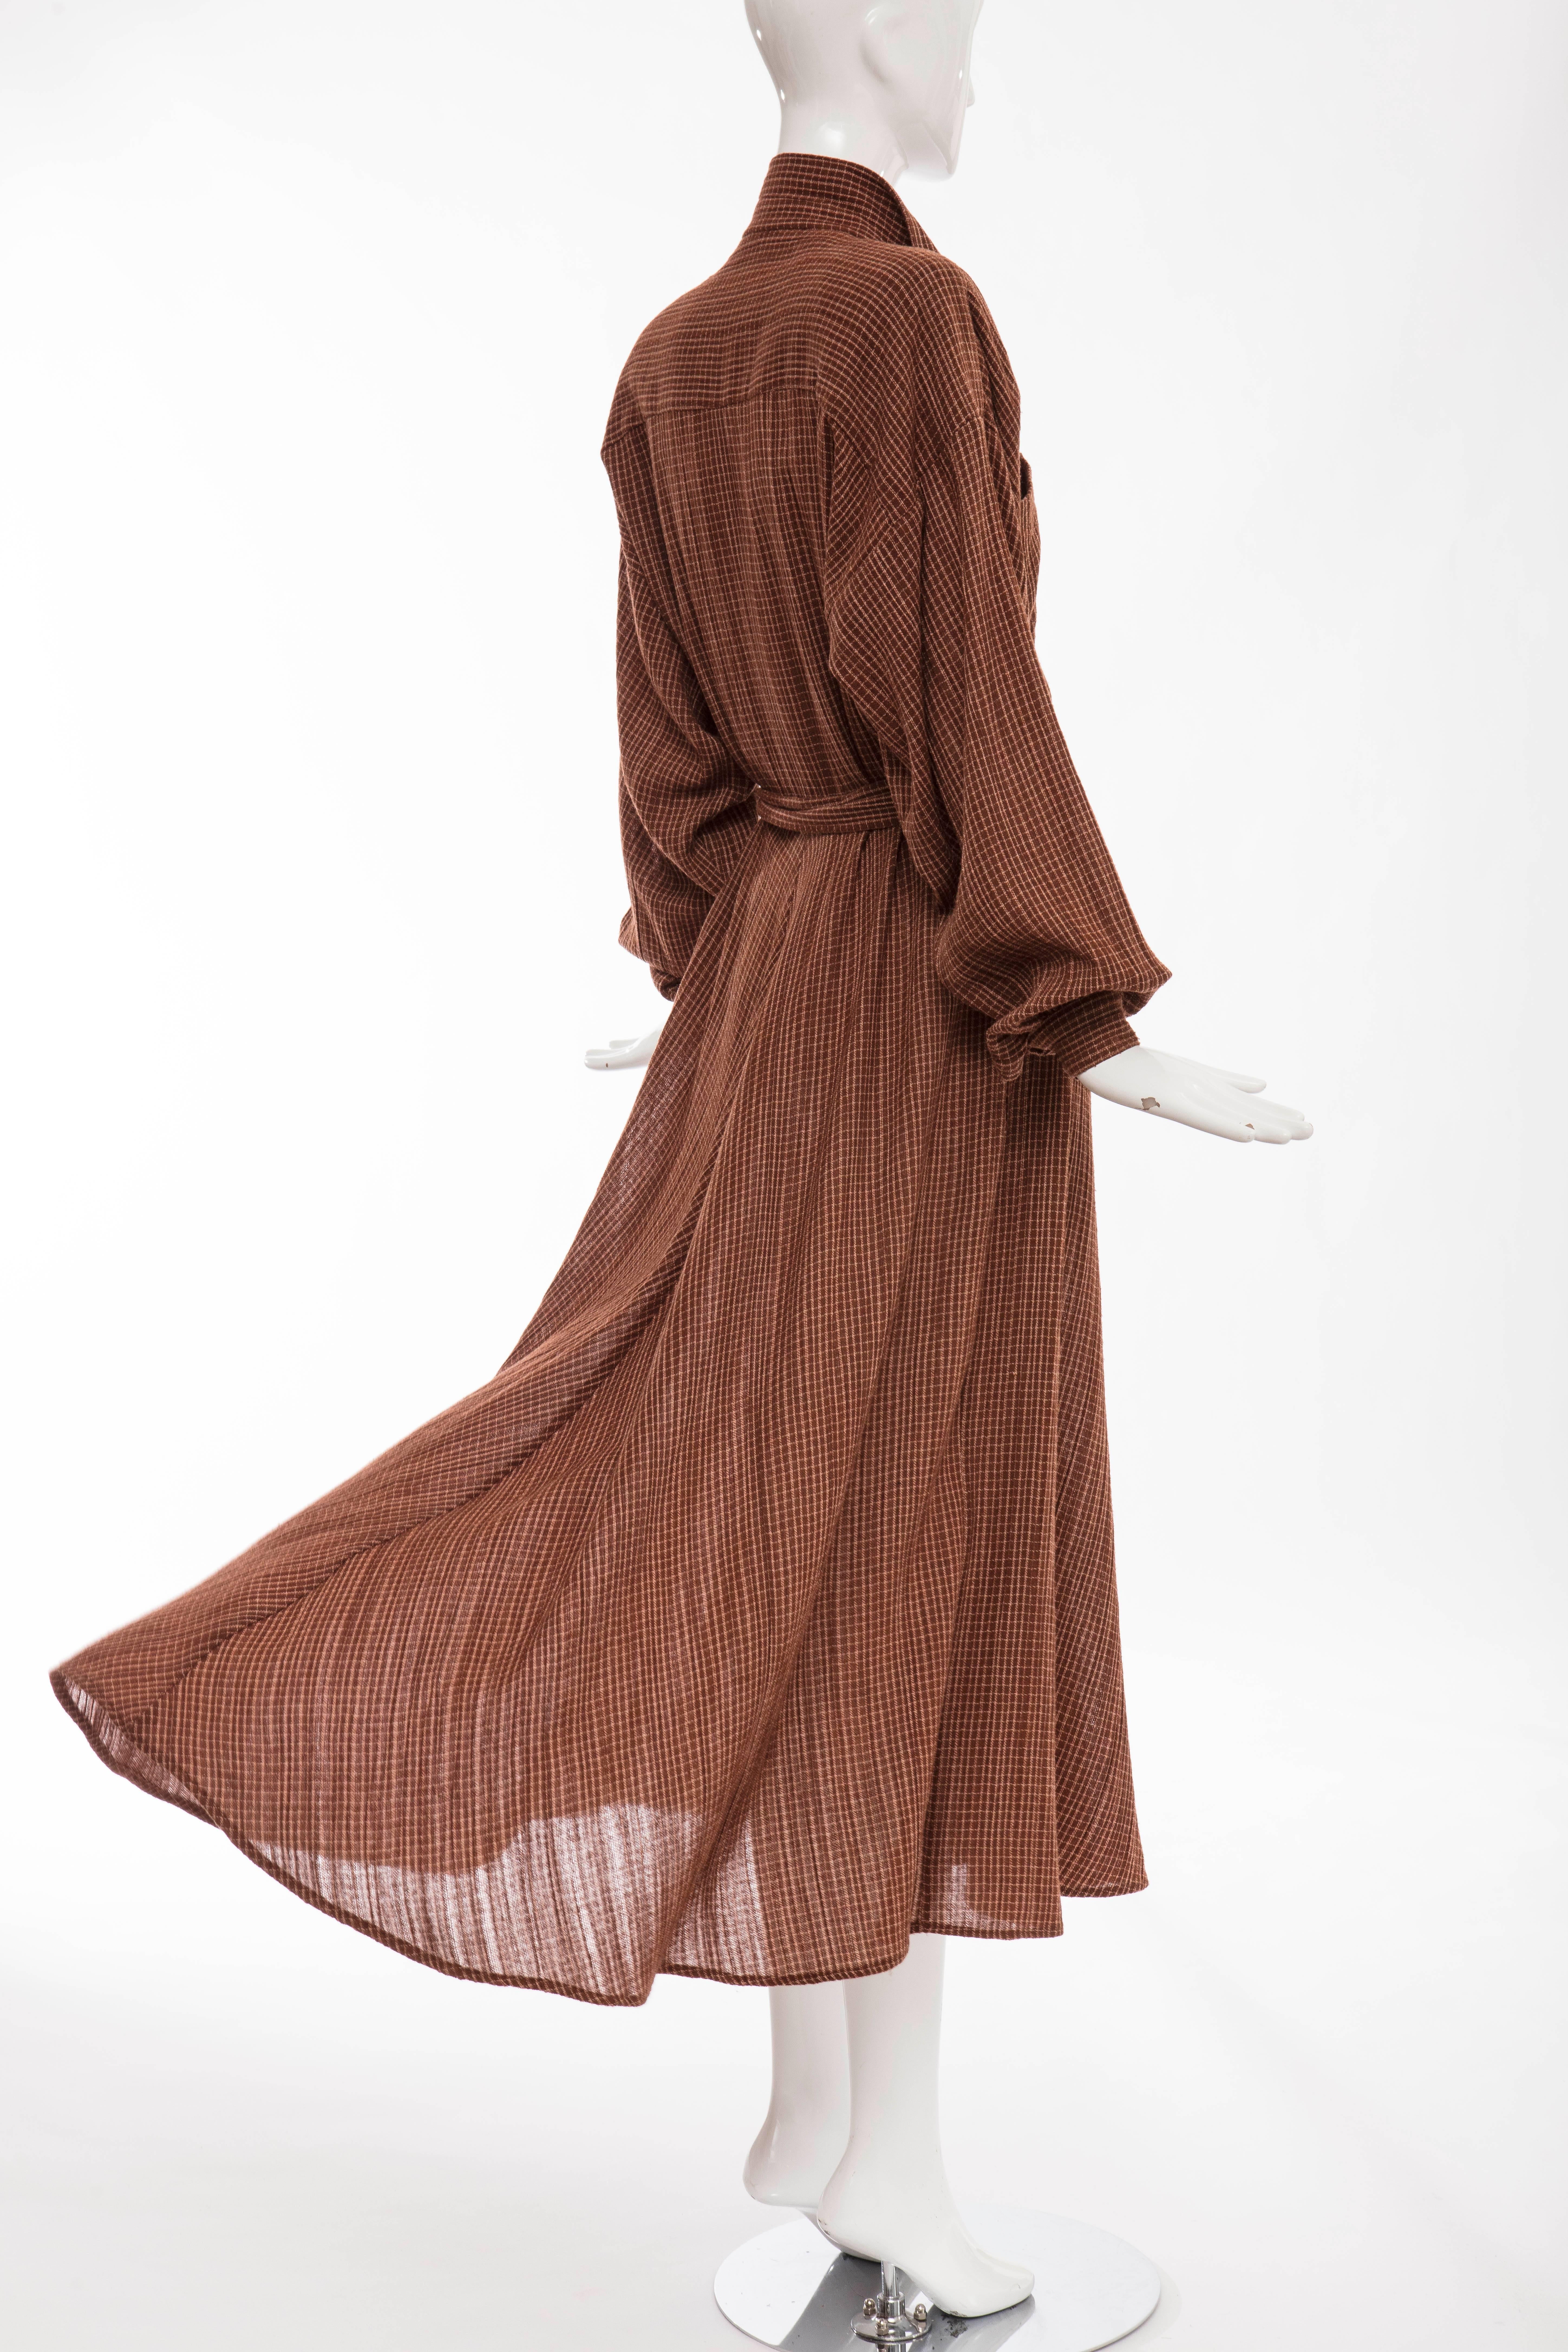 Norma Kamali Terracotta Cotton Gauze Windowpane Check Dress, Circa 1980's 2